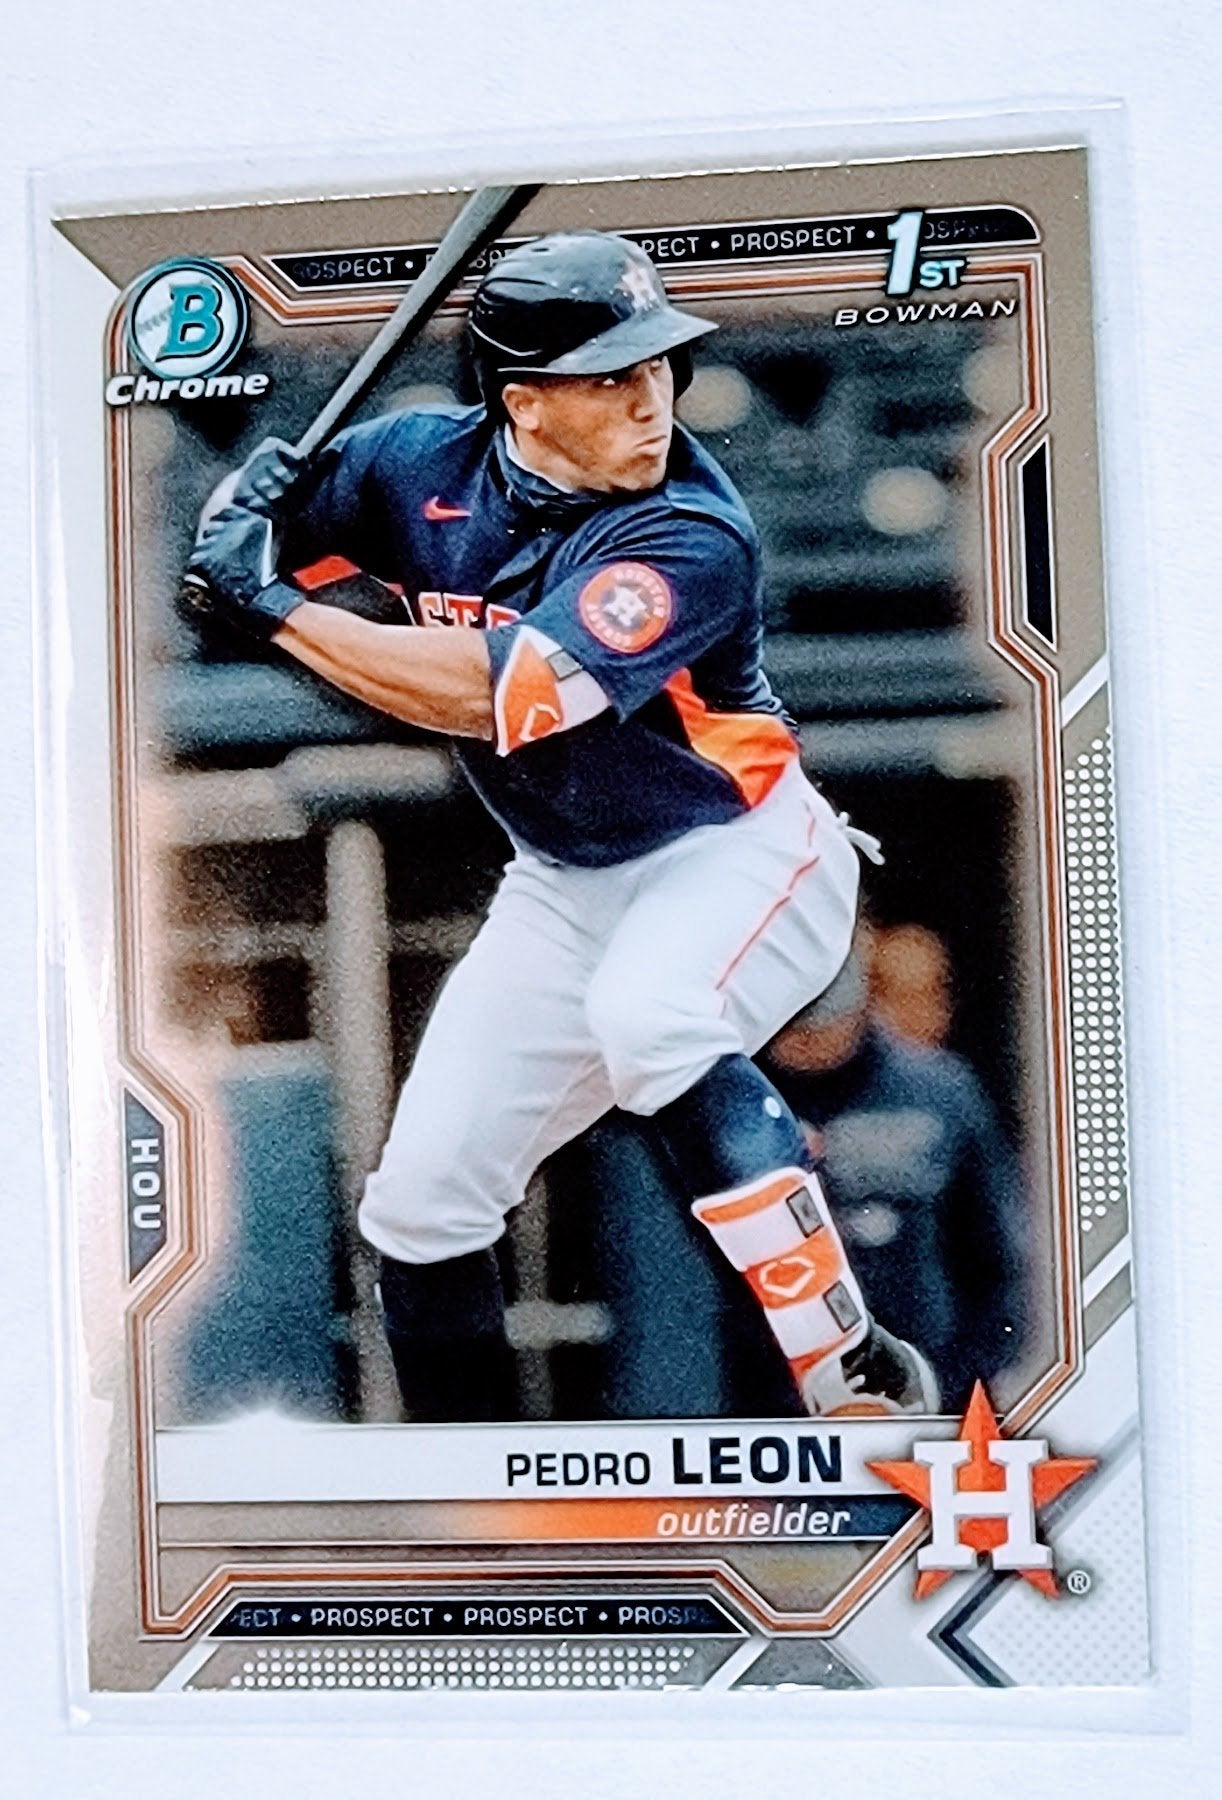 2021 Bowman Chrome Pedro Leon Prospect Baseball Card SMCB1 simple Xclusive Collectibles   